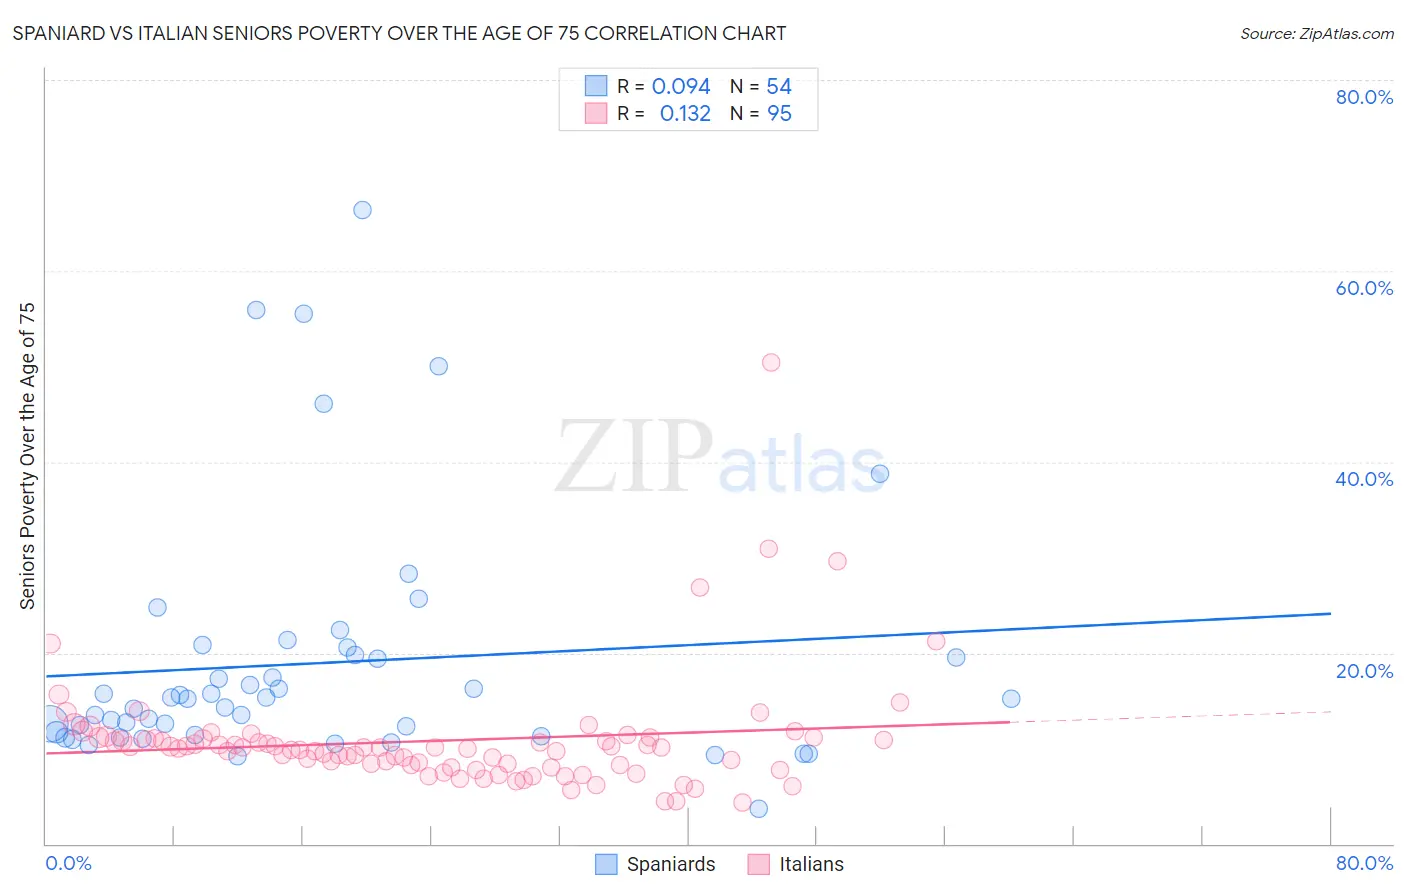 Spaniard vs Italian Seniors Poverty Over the Age of 75